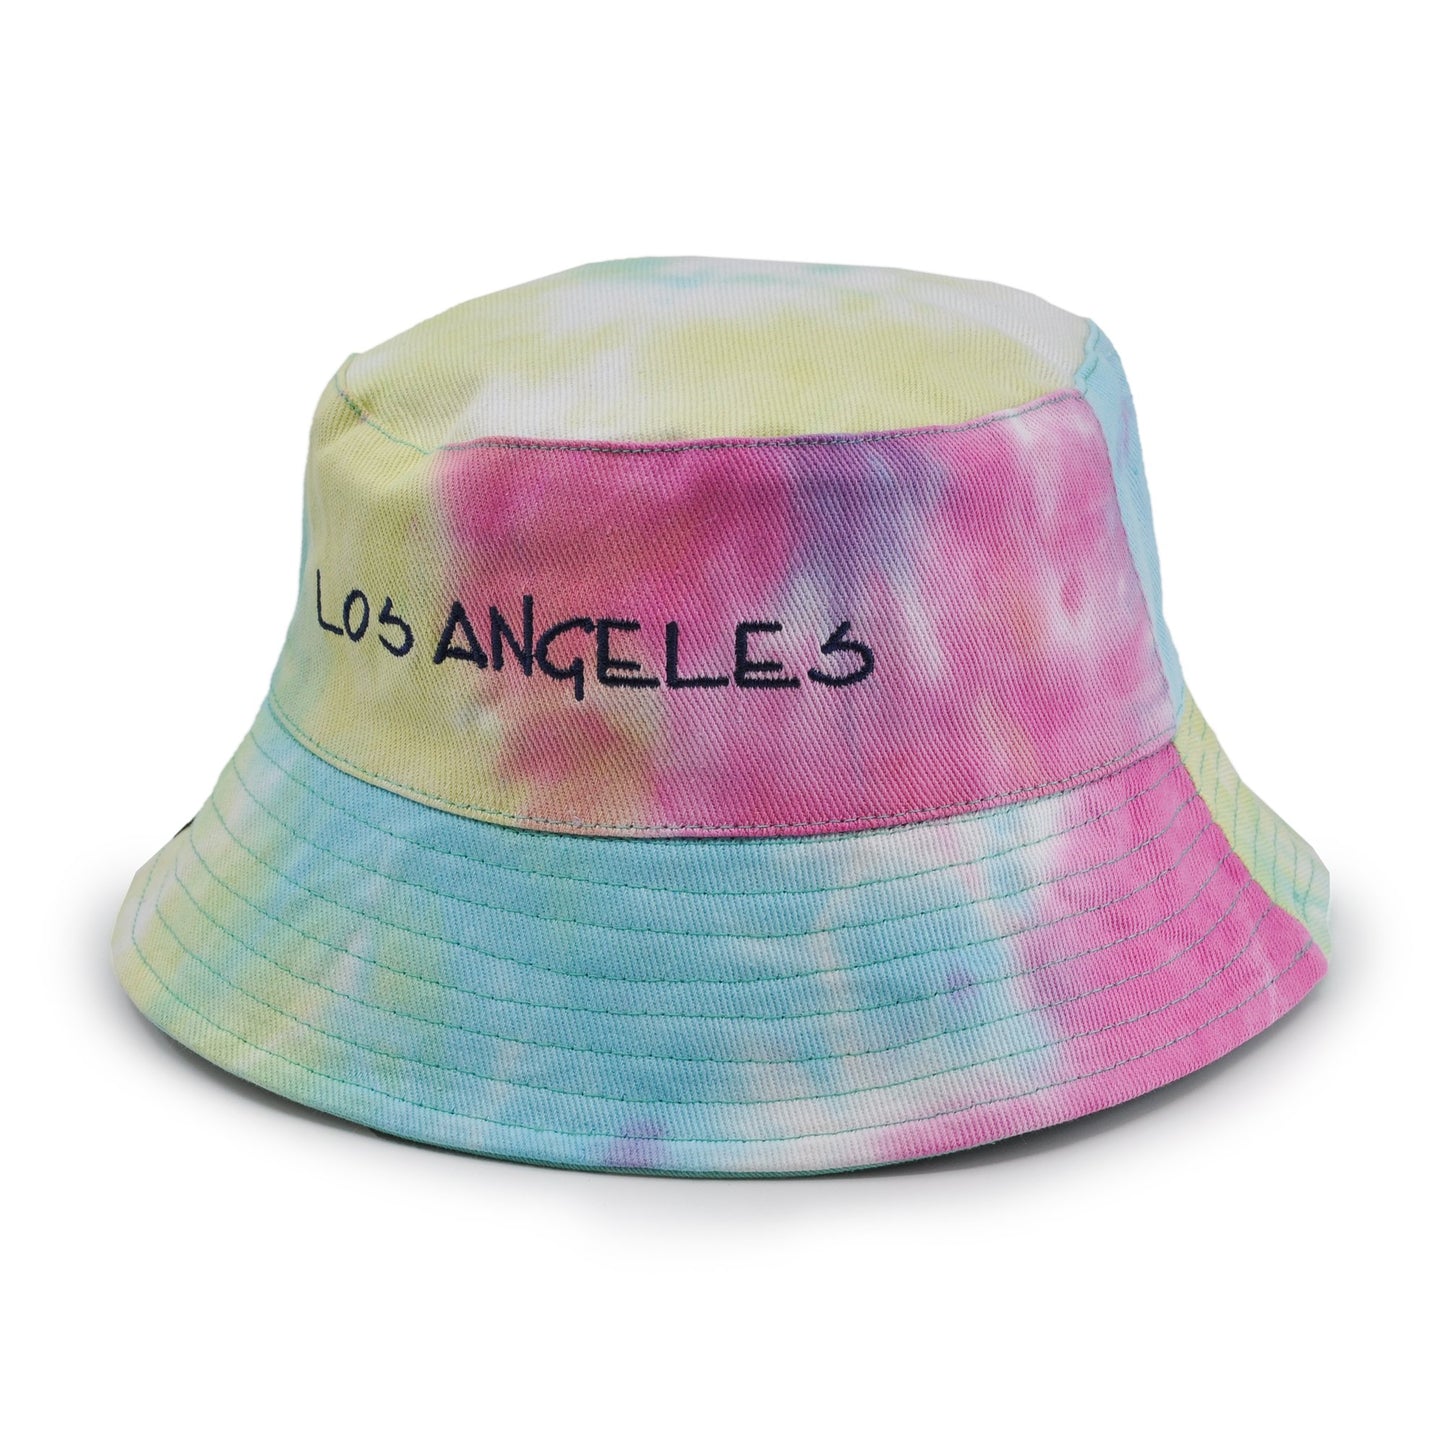 Reversible Your Beach City Unisex 100% Cotton Packable Summer Travel Bucket Beach Sun Hat Outdoor Cap. (Tie Dye Rainbow/Mint Green)